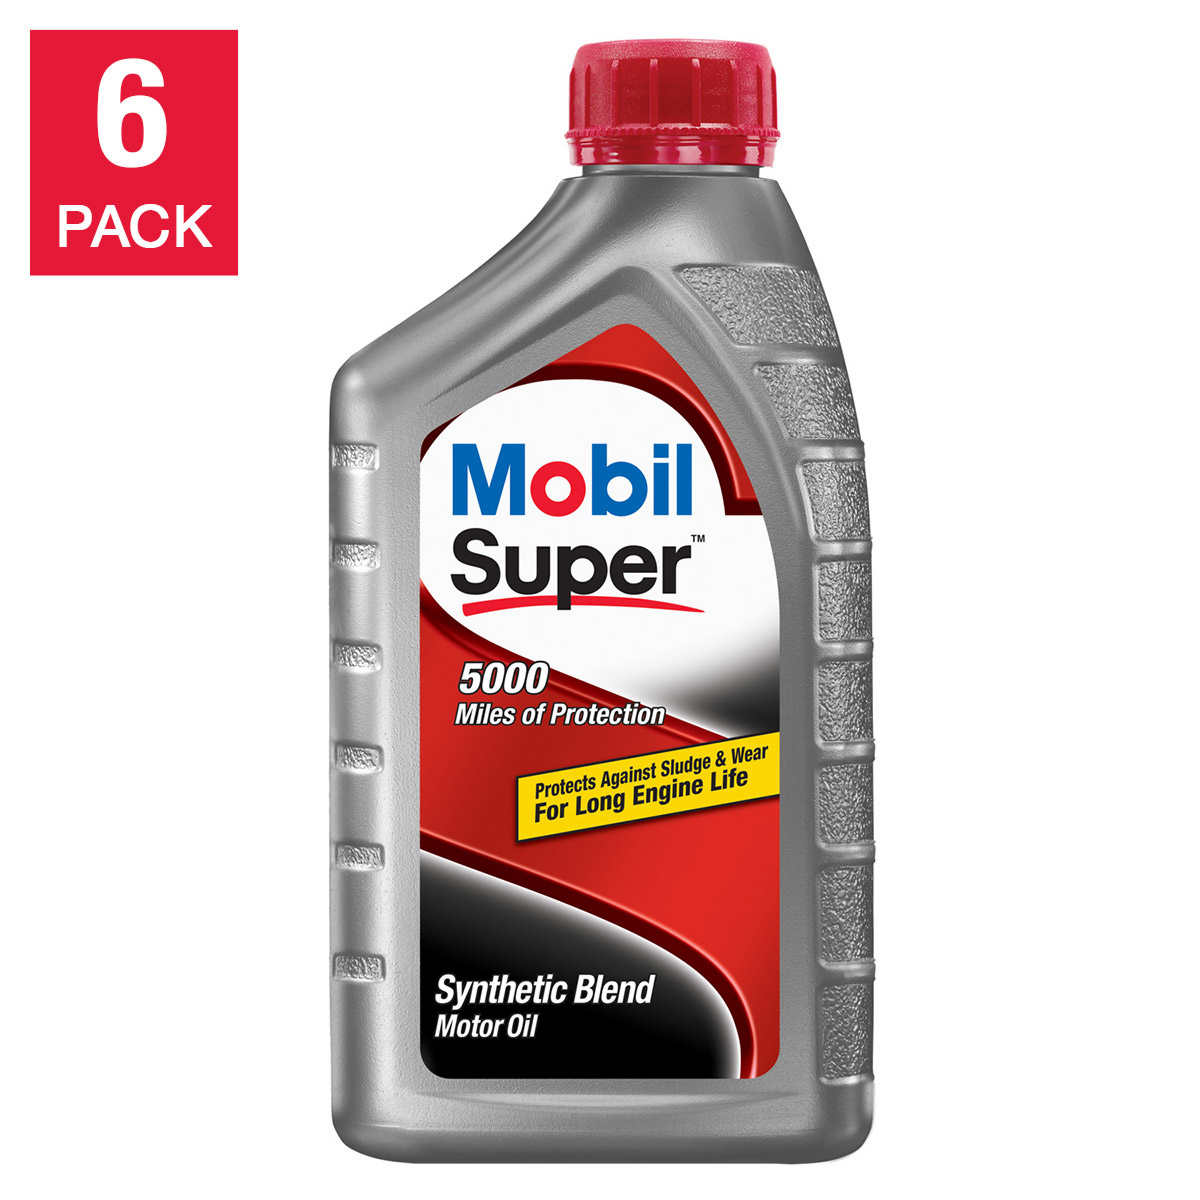 Mobil Super Synthetic Blend Motor Oil 1 Quart 6 Pack